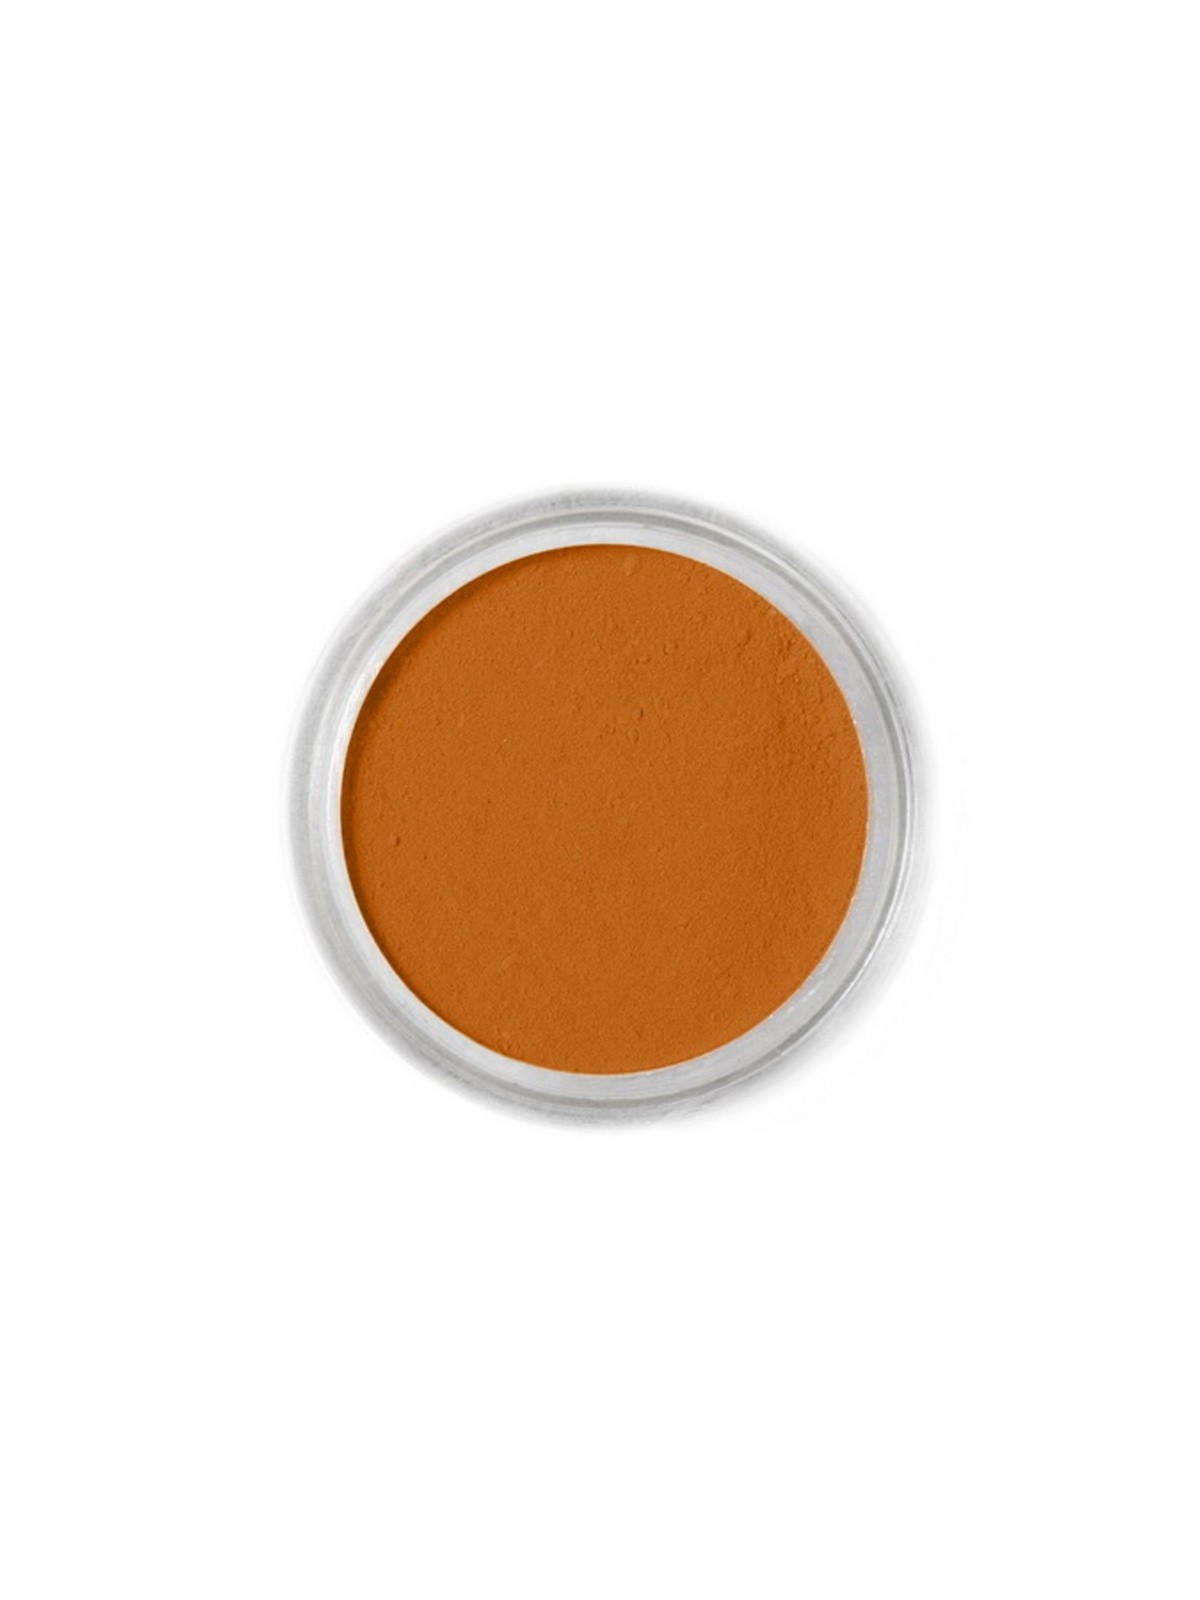 Jedlá prachová barva Fractal - hnědá - Squirrel Brown, Mókusbarna (1,7 g)